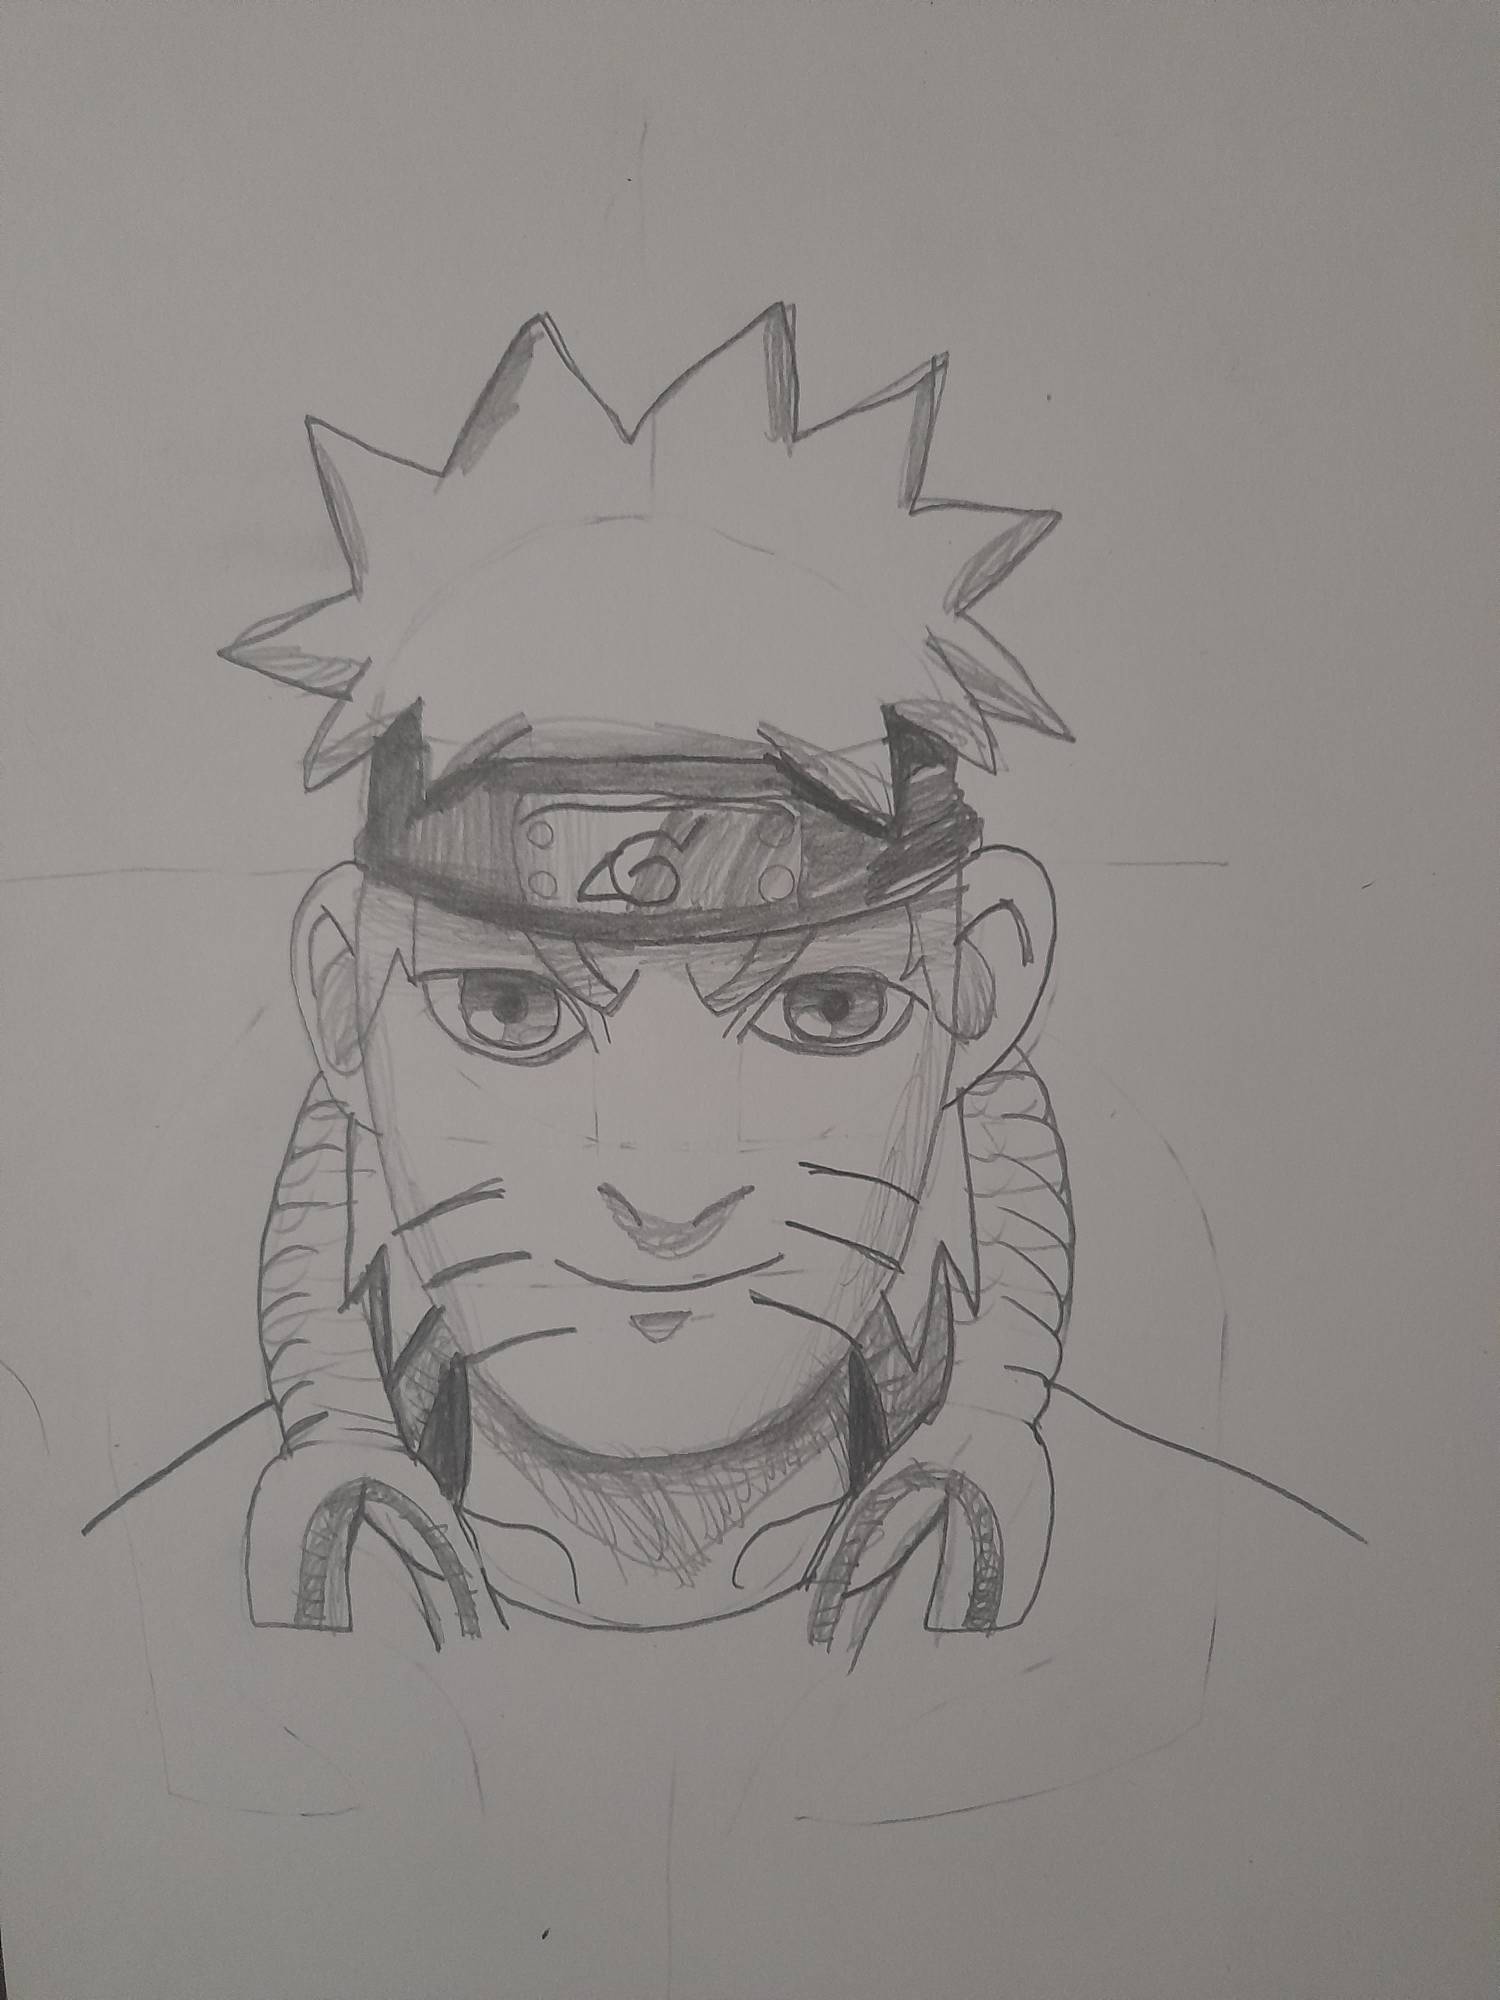 Naruto sketch by grei10 on DeviantArt